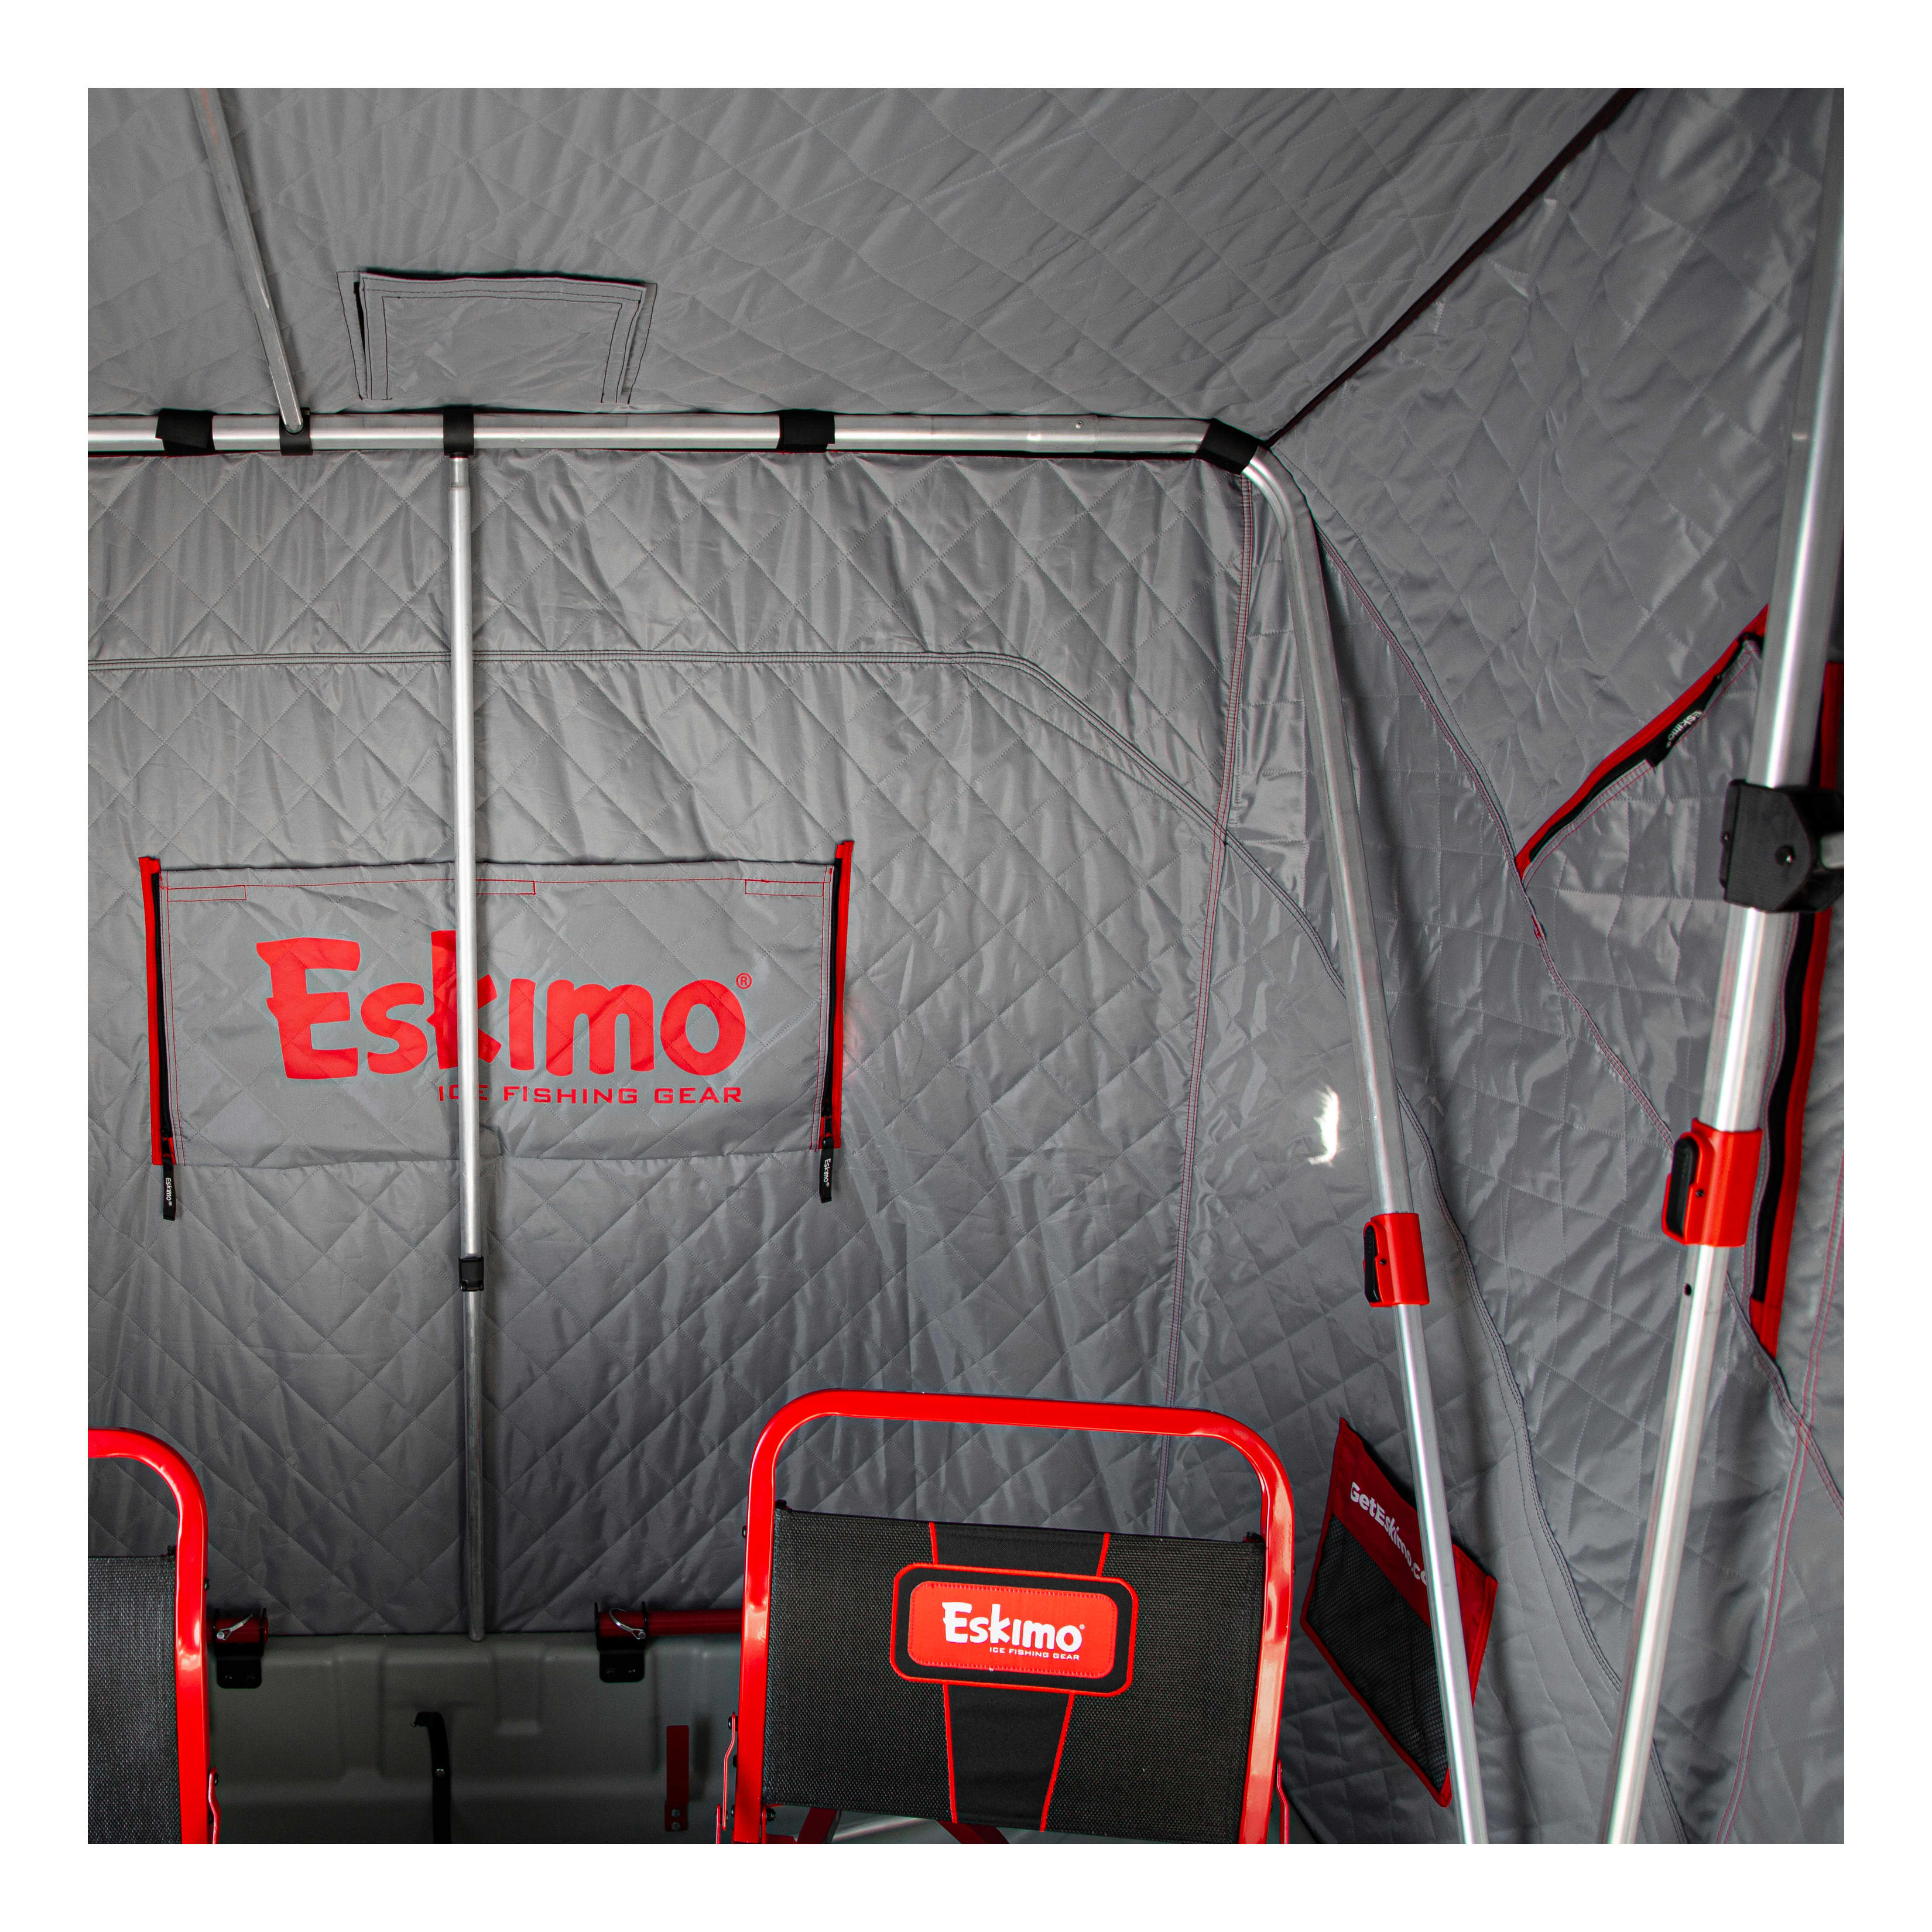 Eskimo® Eskape 2800 Ice Shelter